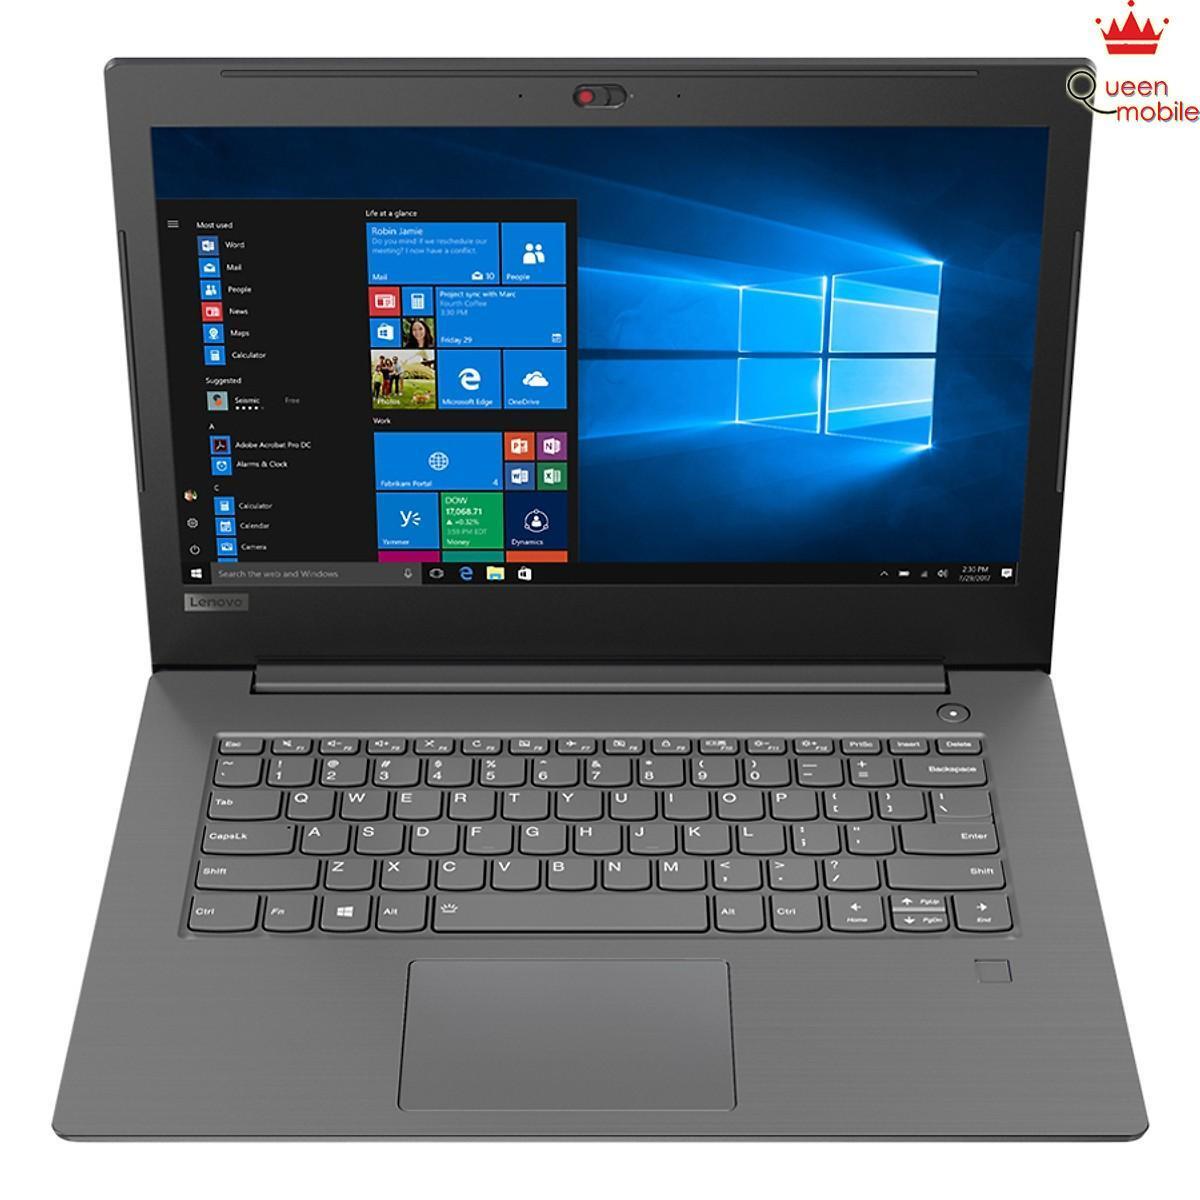 Laptop Lenovo V330-14IKBR 81B0008LVN - Intel core i5, 4GB RAM, HDD 1TB, Intel UHD Graphics, 14 inch